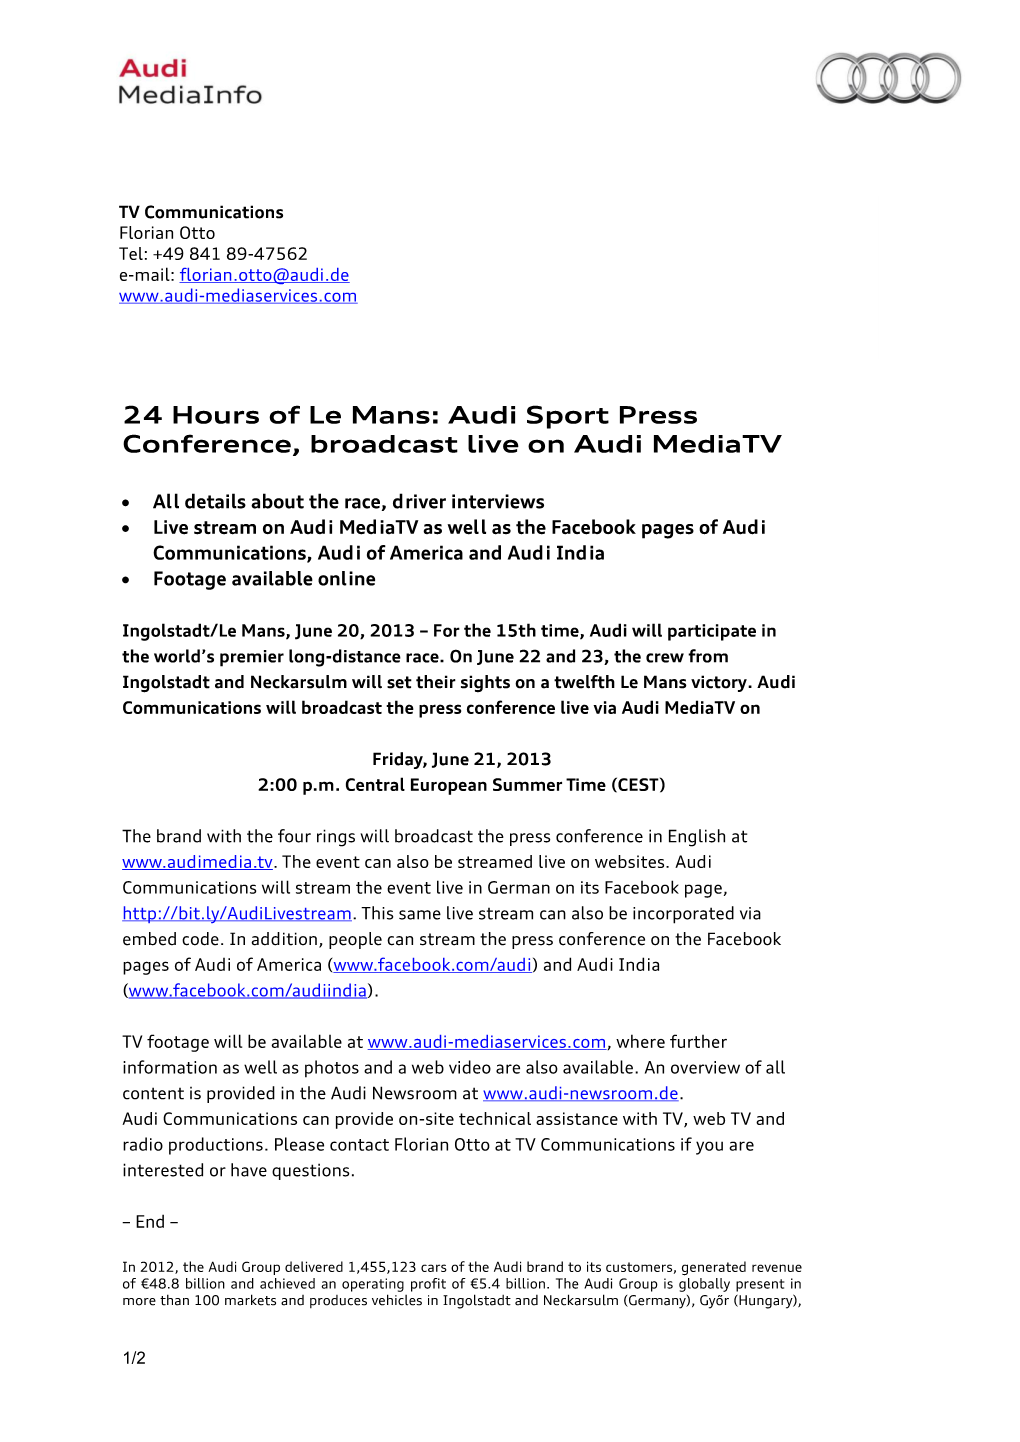 24 Hours of Le Mans: Audi Sport Press Conference, Broadcast Live on Audi Mediatv